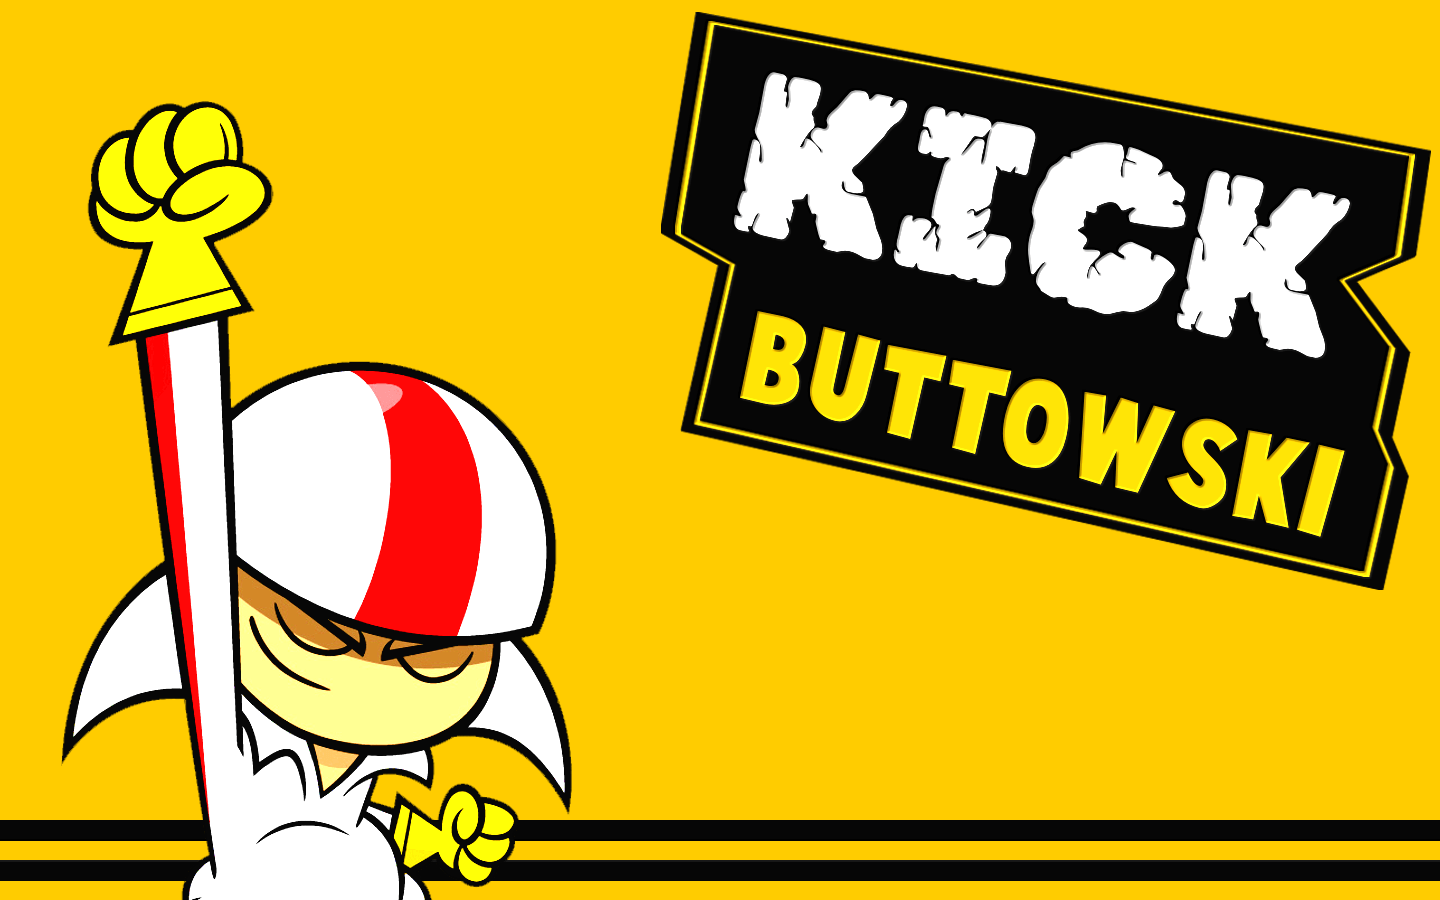 Kick Buttowski awesome. Pure Awesomeness. Awesome